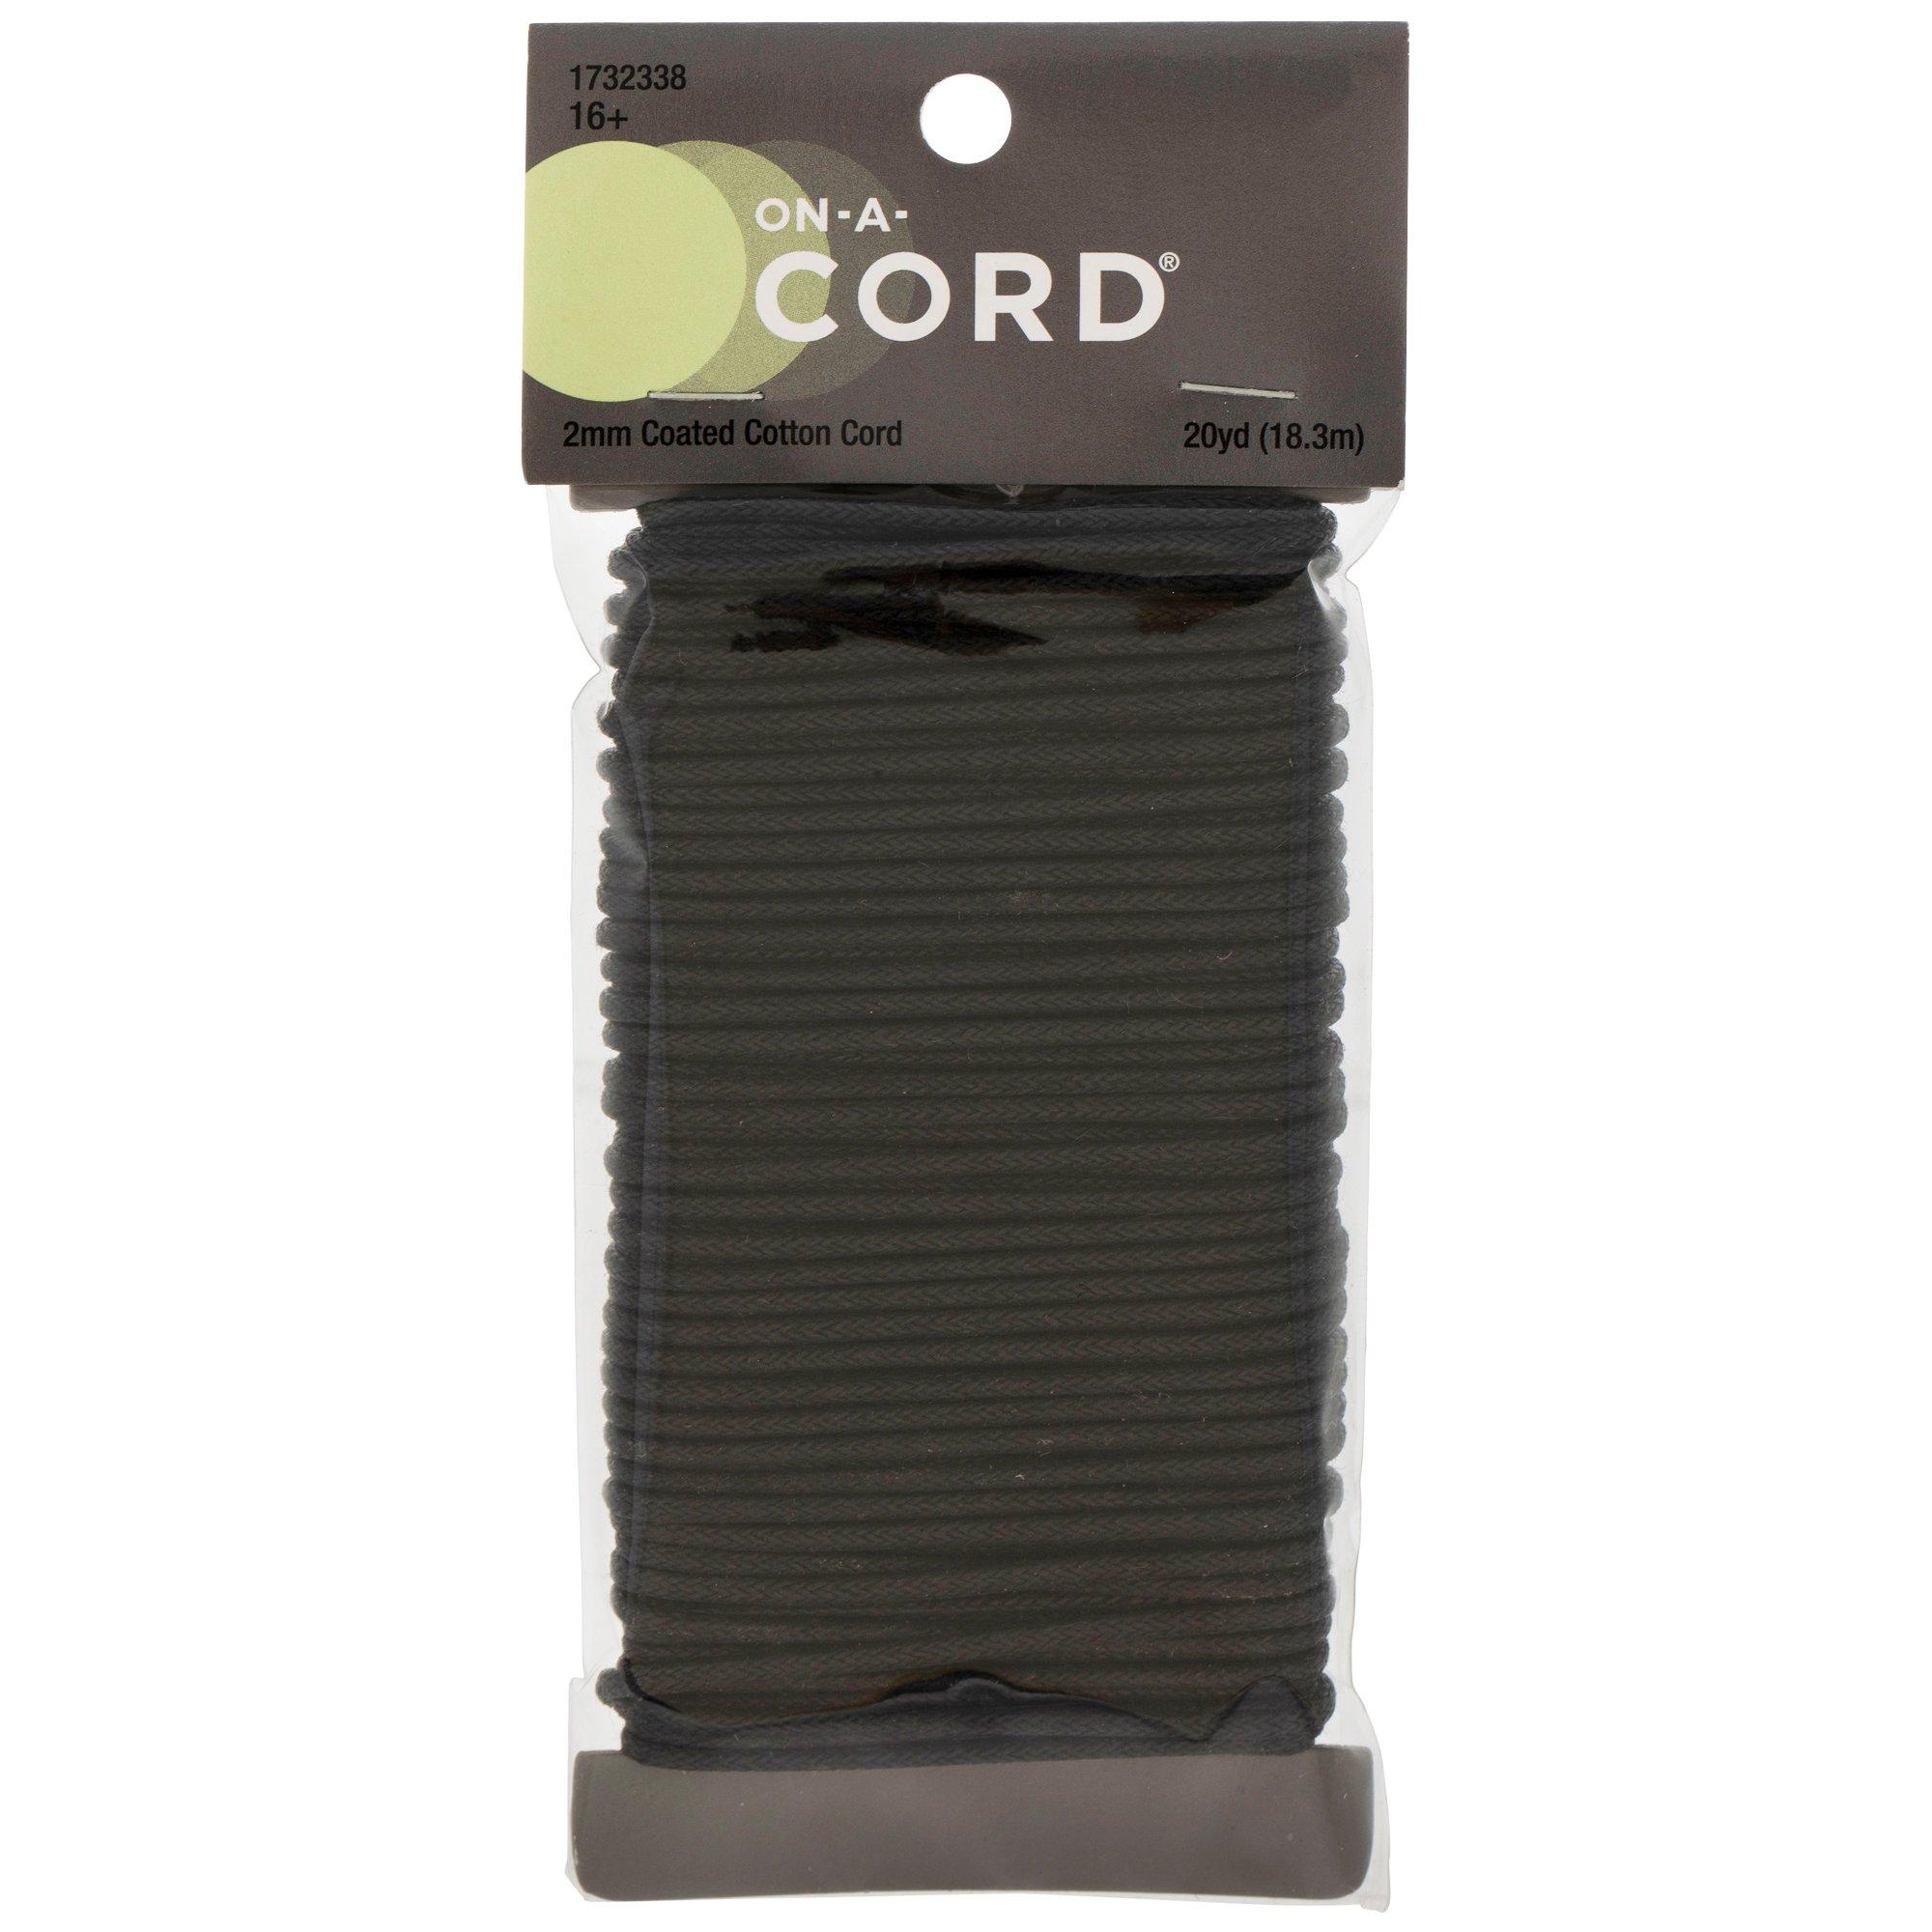 Pepperell Cotton Craft Cord 2mmx100'-Black